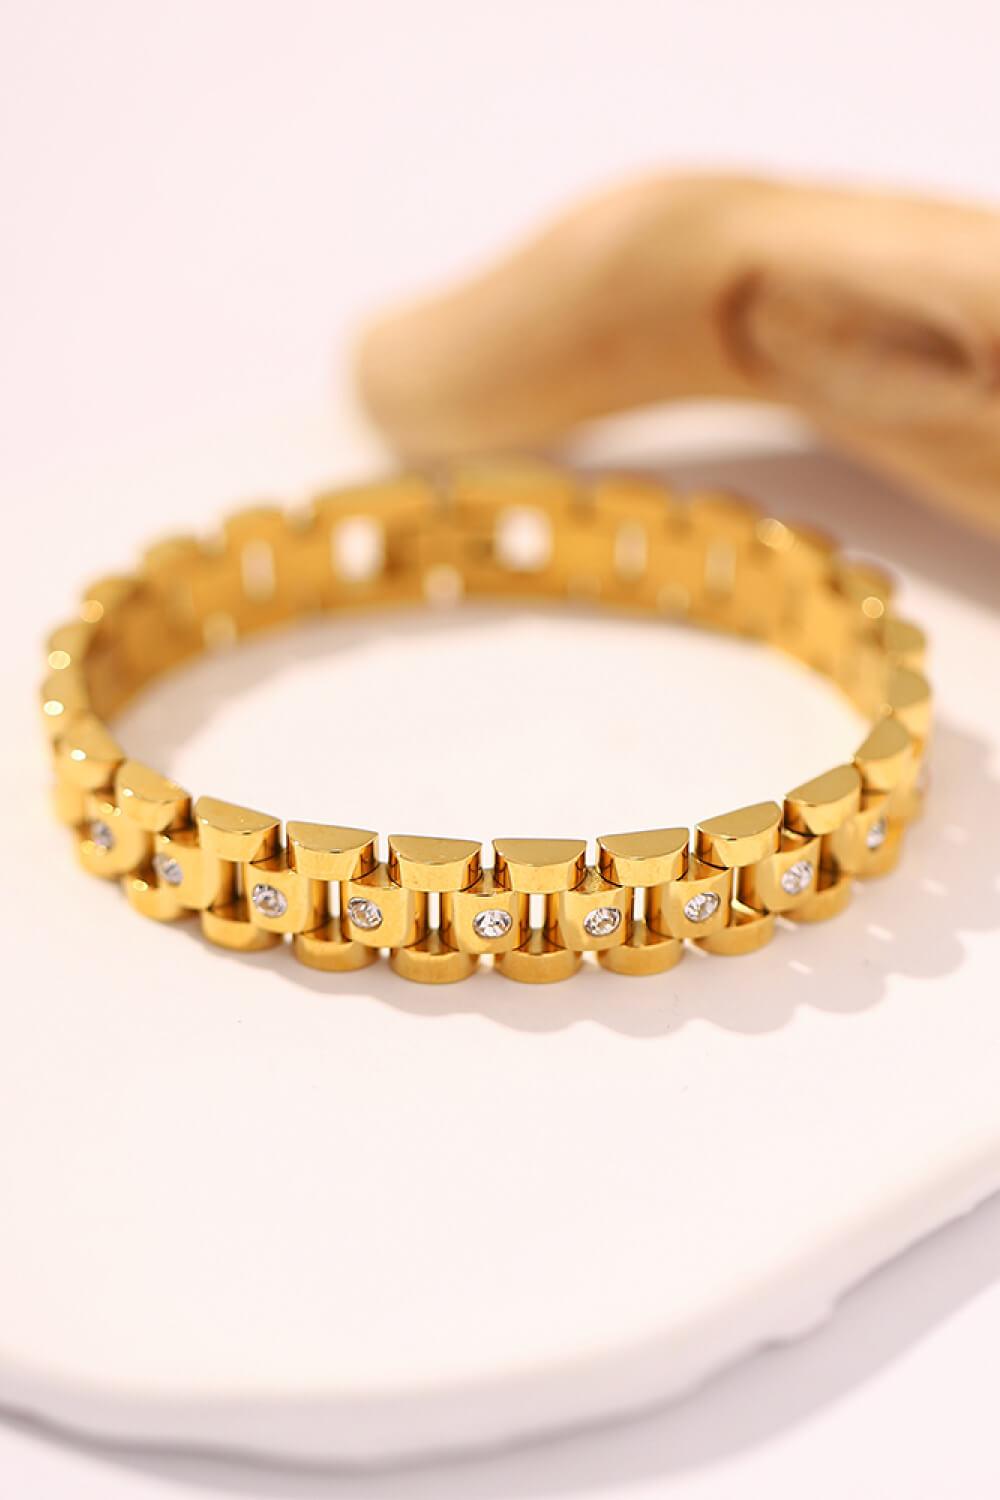 18K Gold-Plated Watch Band Bracelet - Glamorous Boutique USA L.L.C.